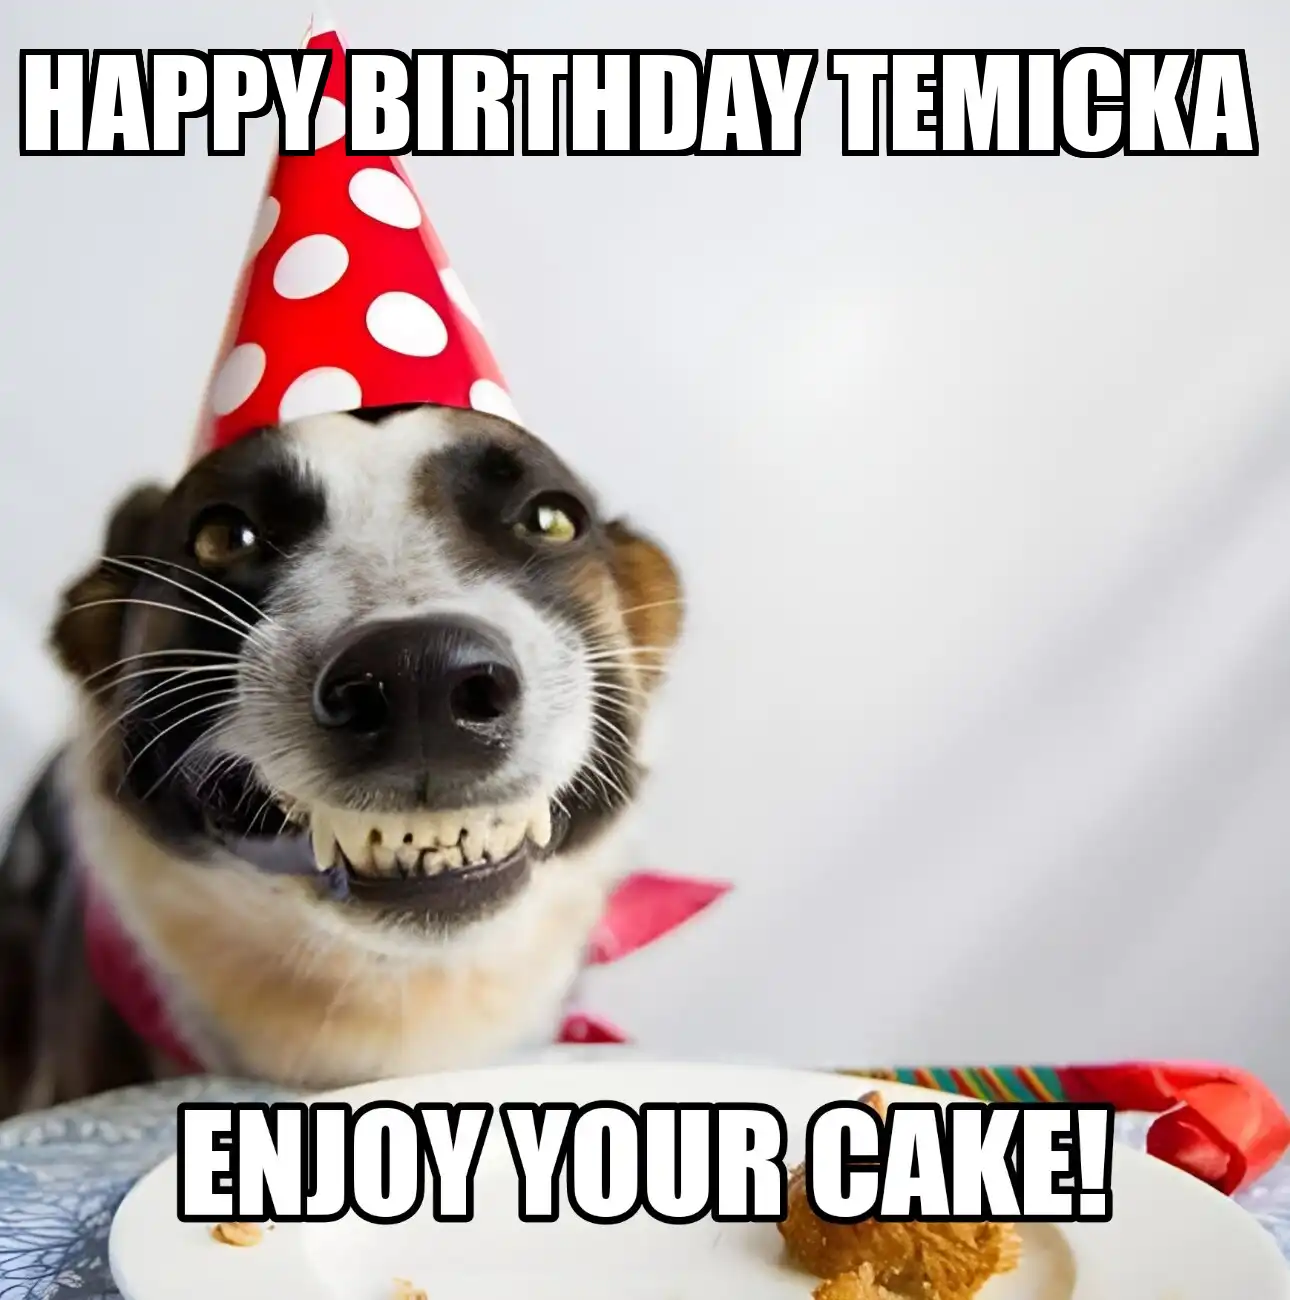 Happy Birthday Temicka Enjoy Your Cake Dog Meme